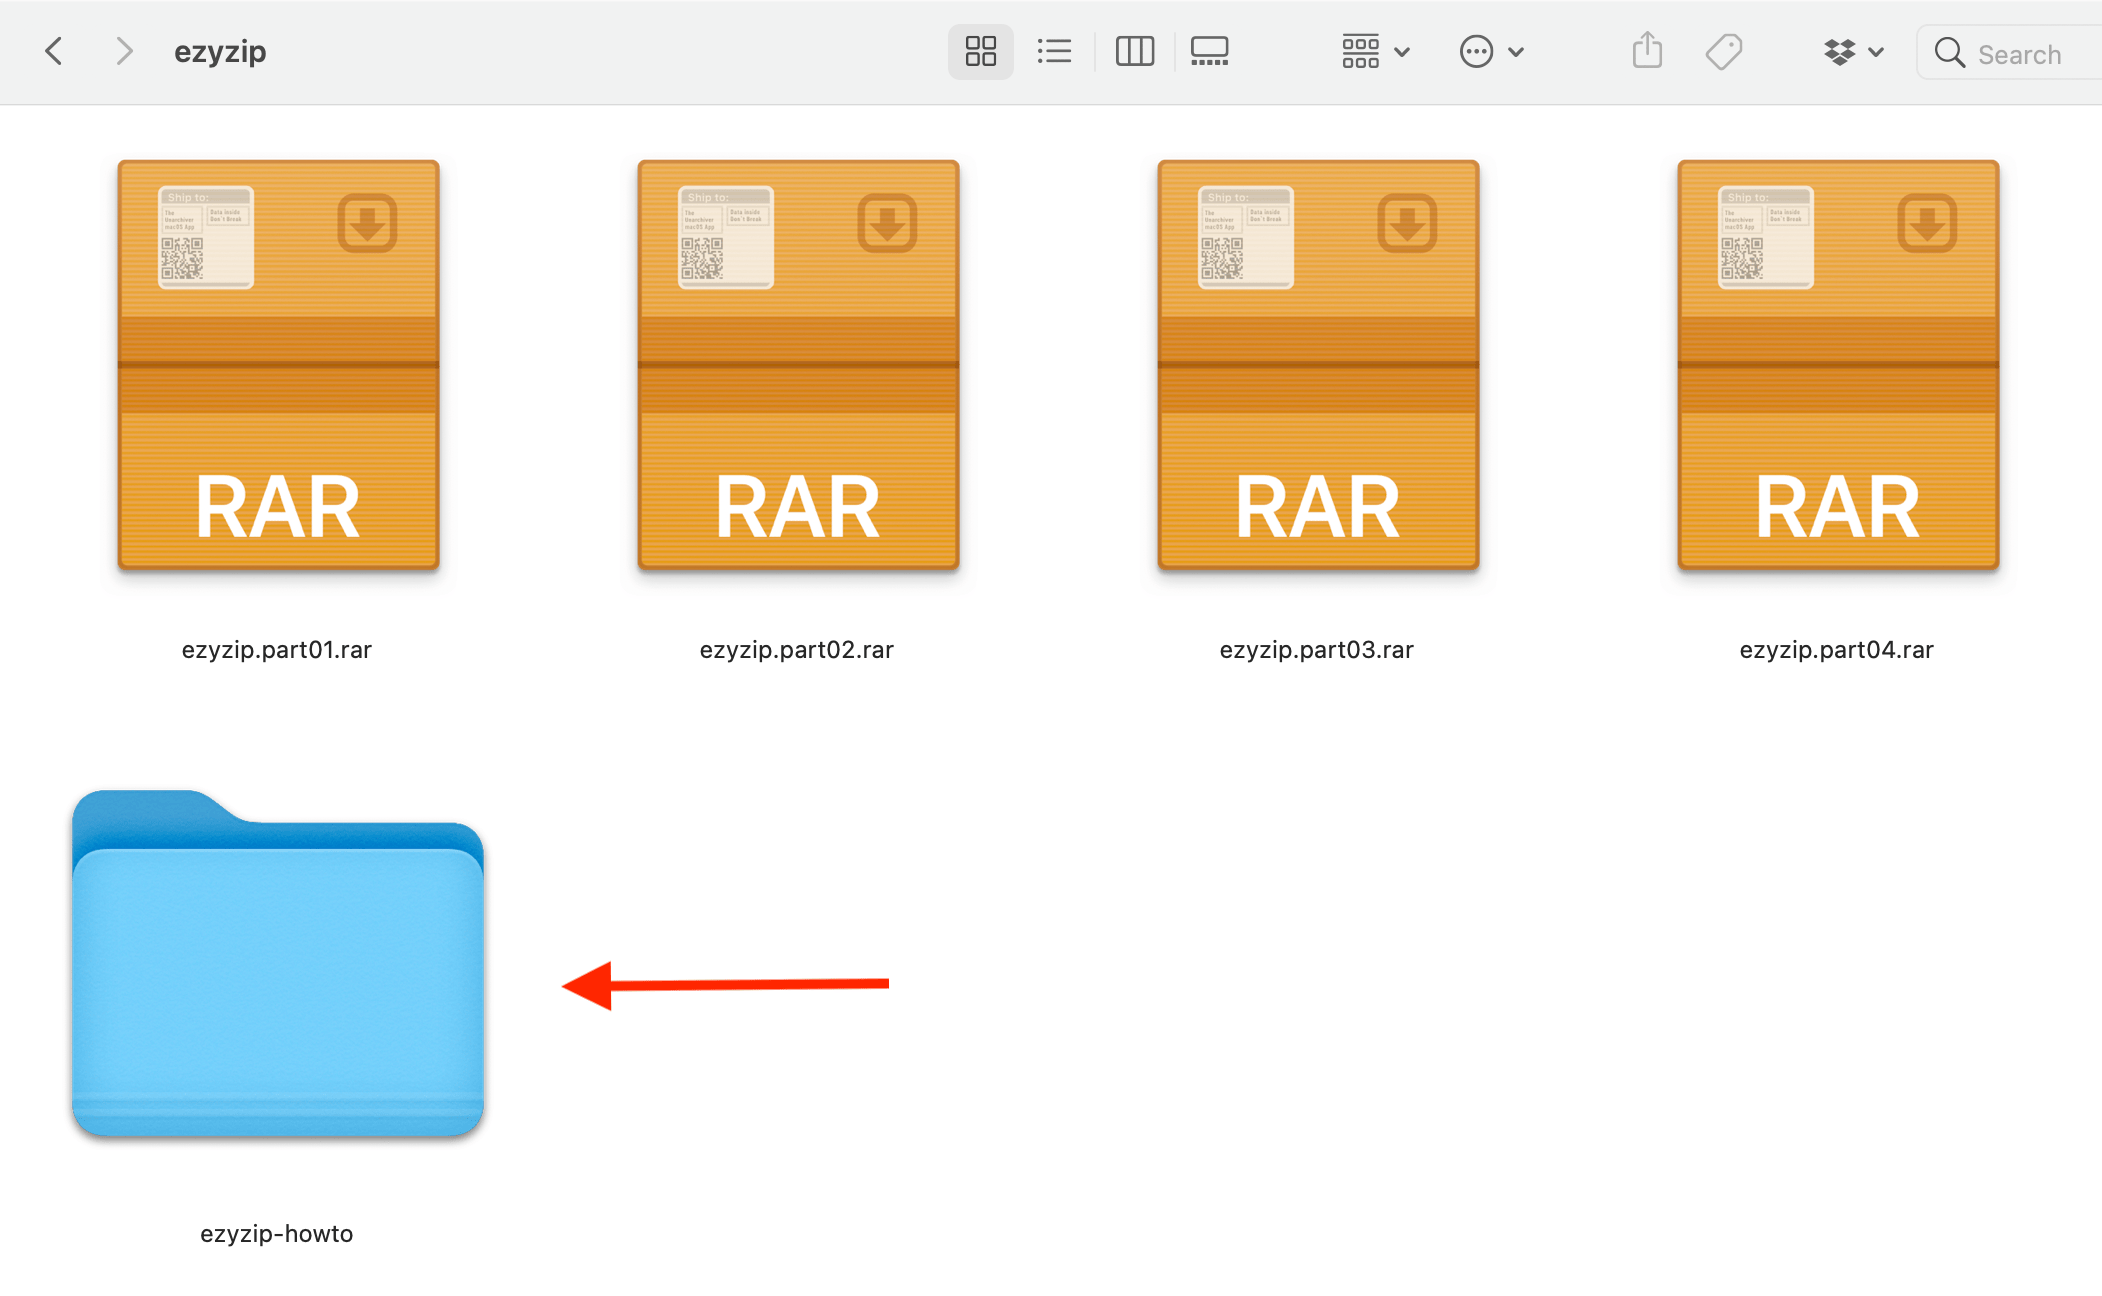 How To Open Multipart RAR Files Using Keka: Step 4